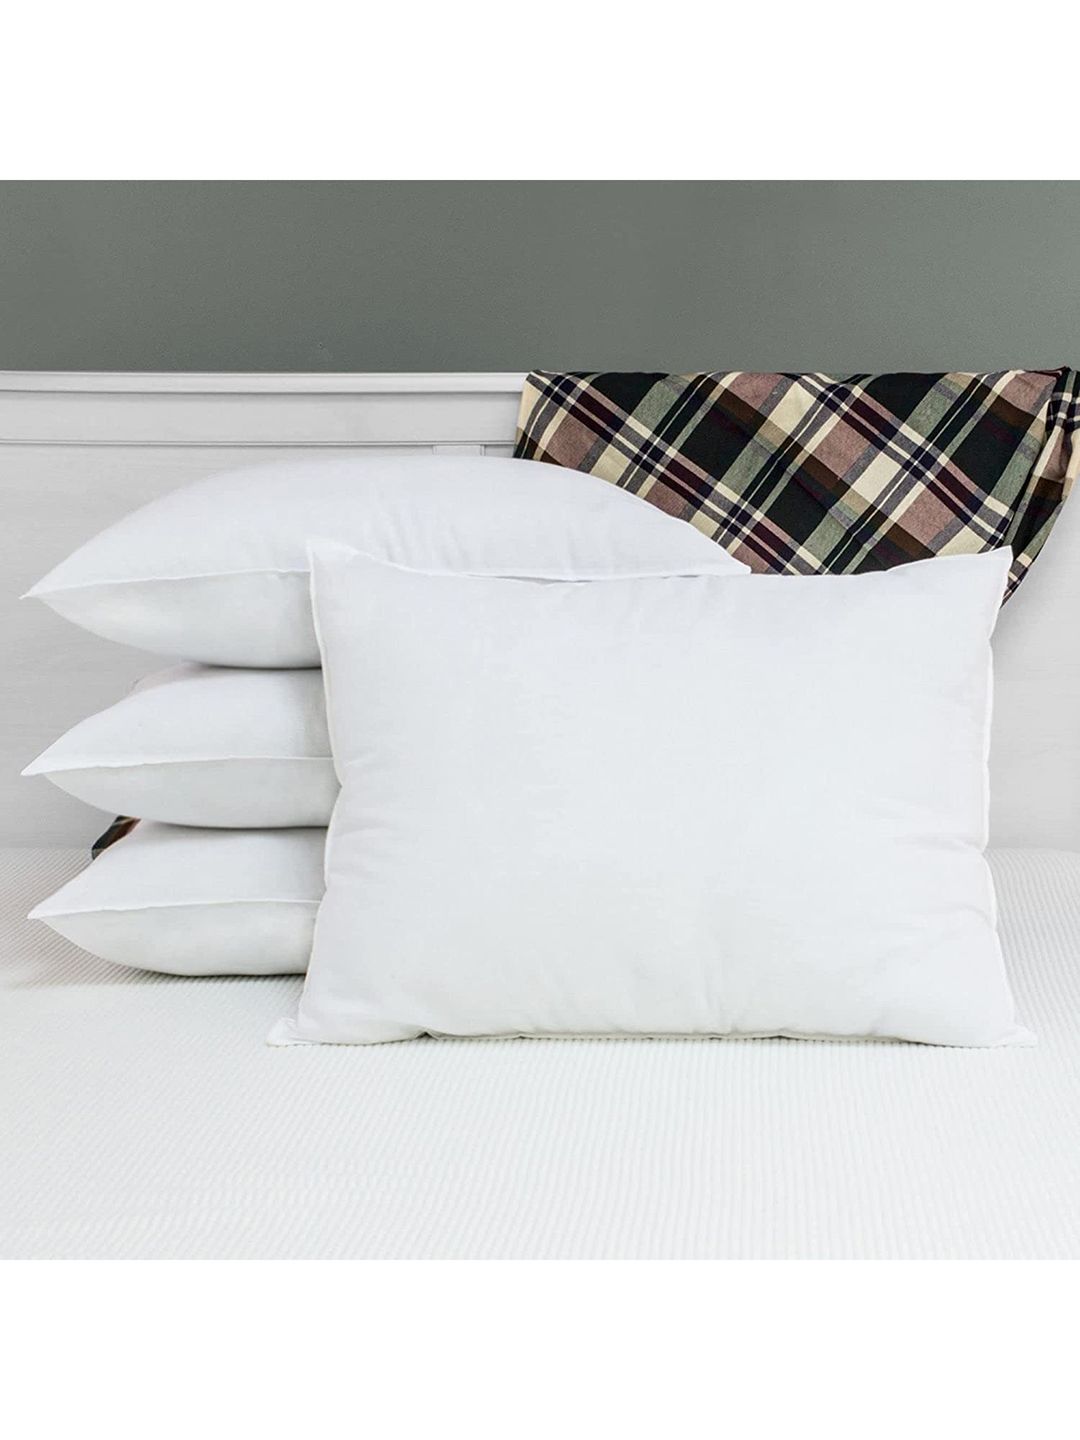 Pum Pum Set Of 4 White Solid Micro Fiber Sleep Pillows Price in India